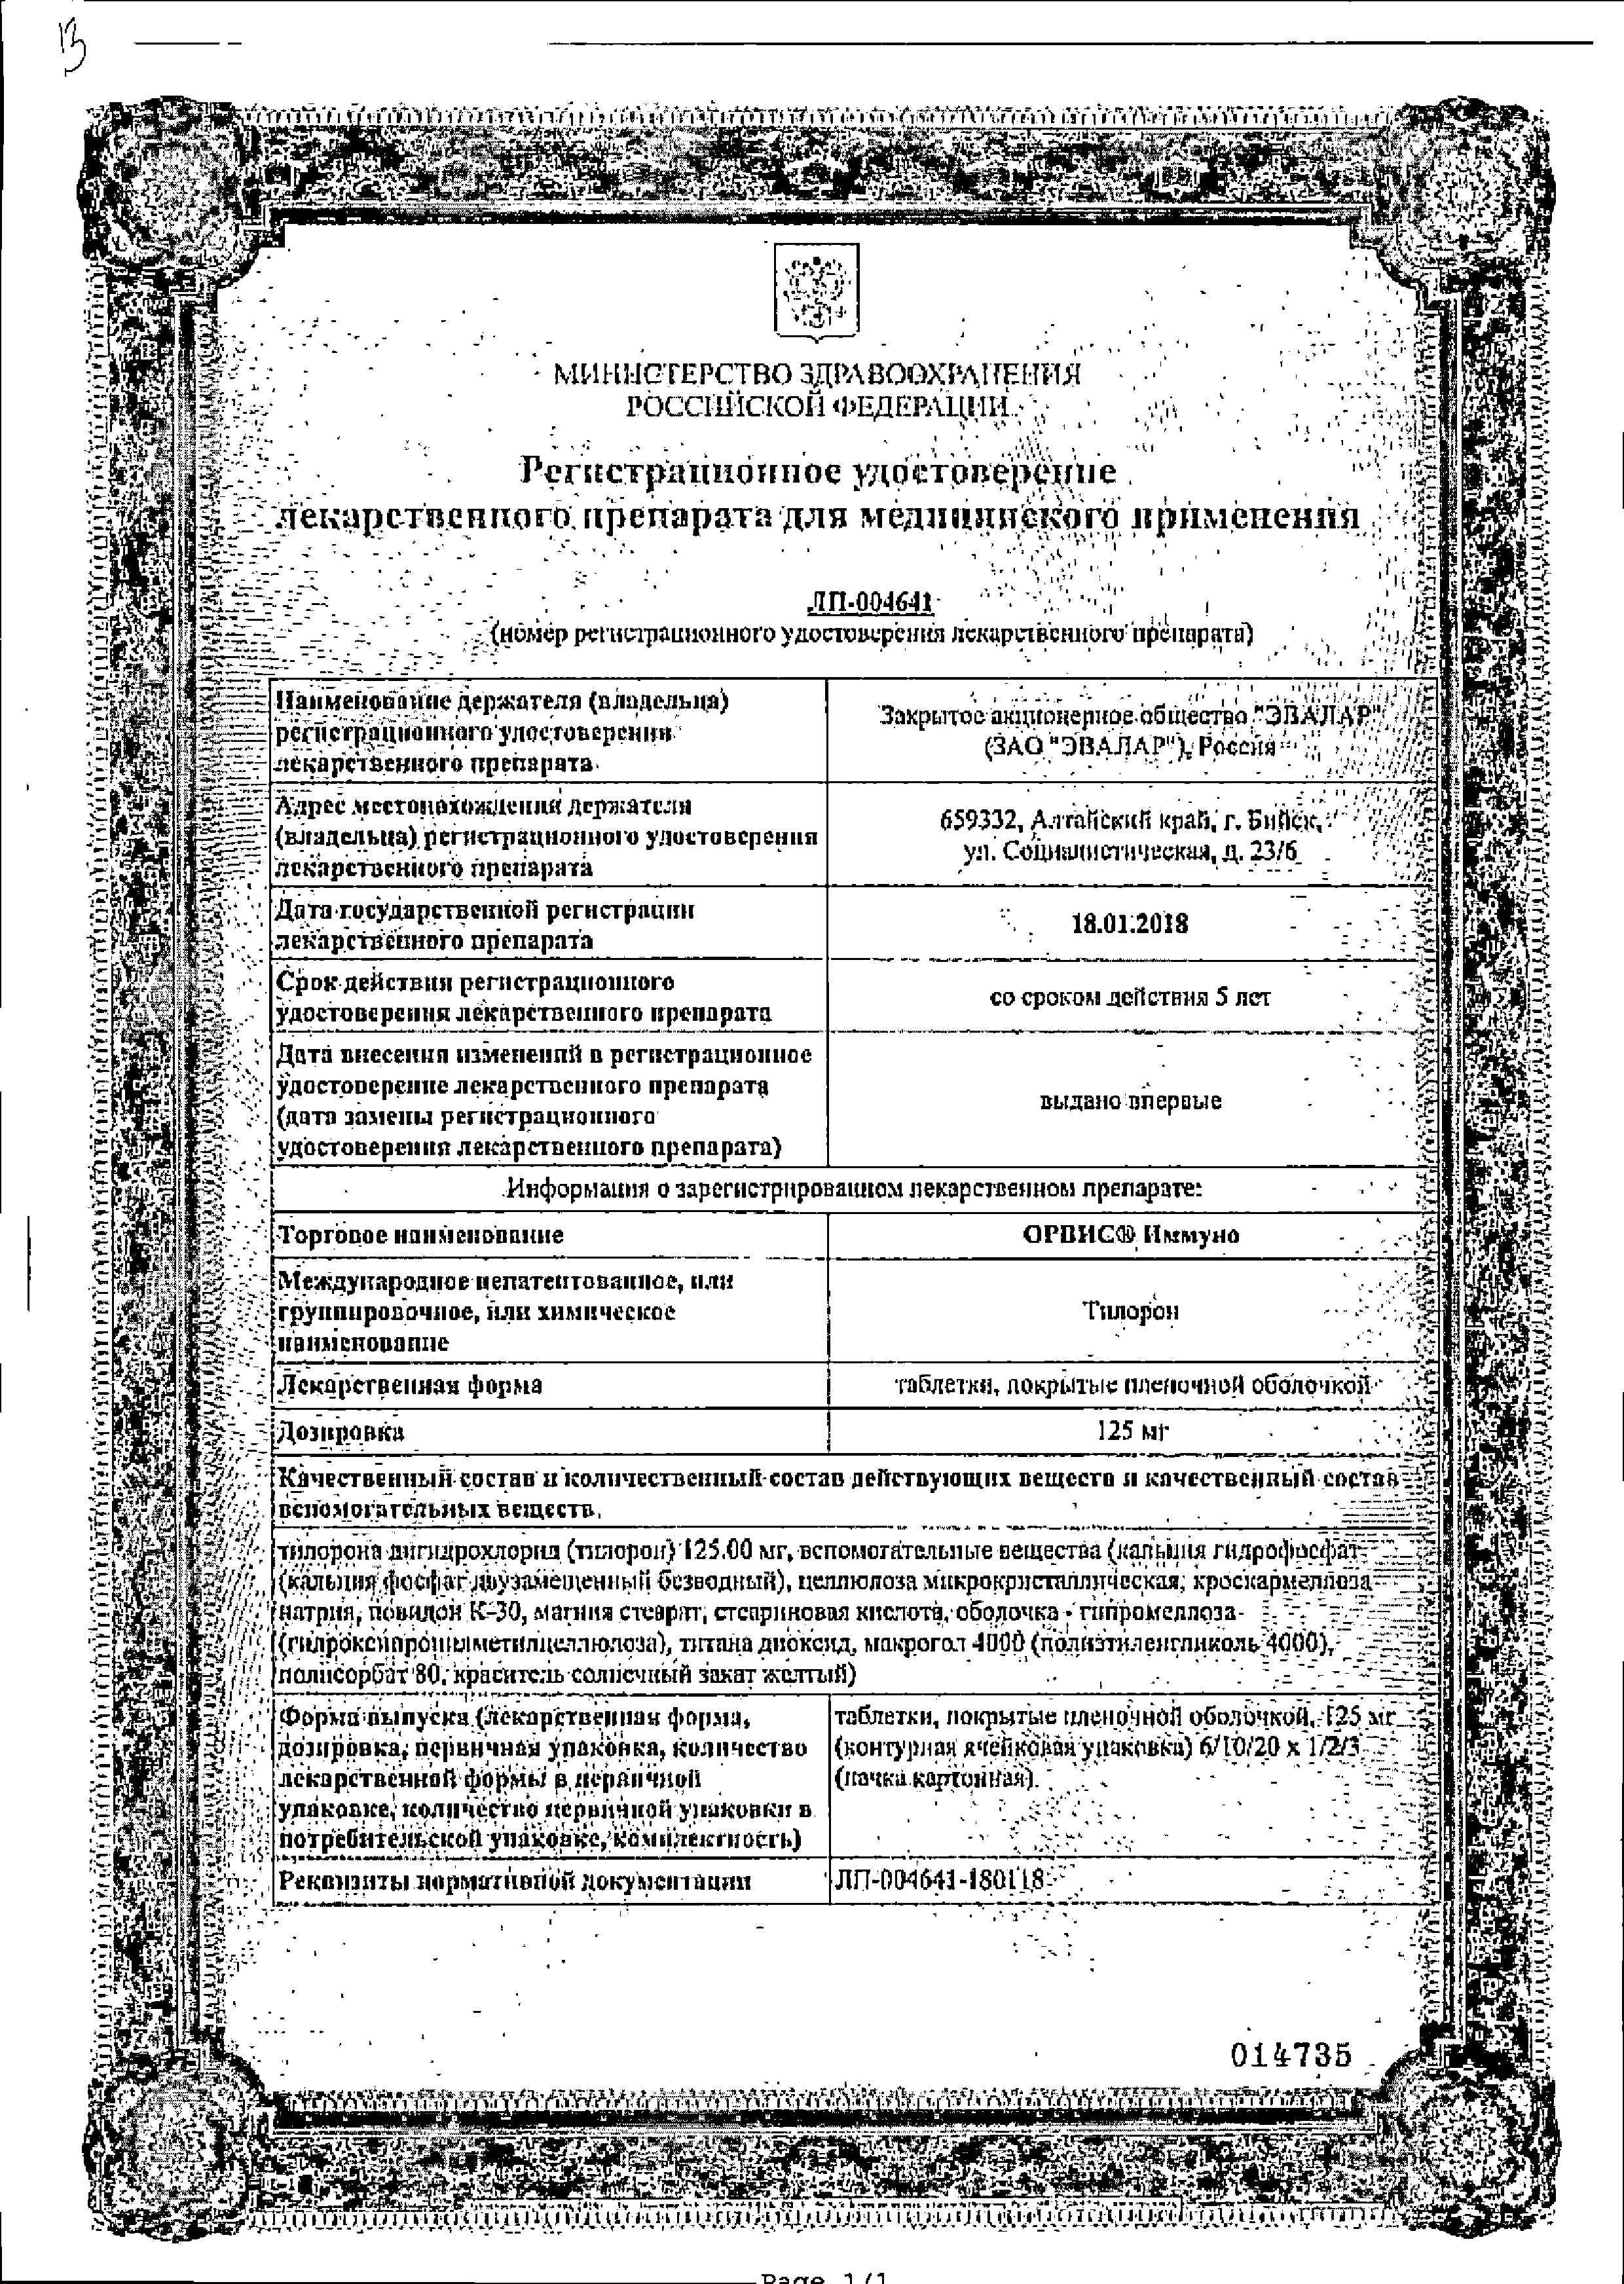 Орвис Иммуно сертификат